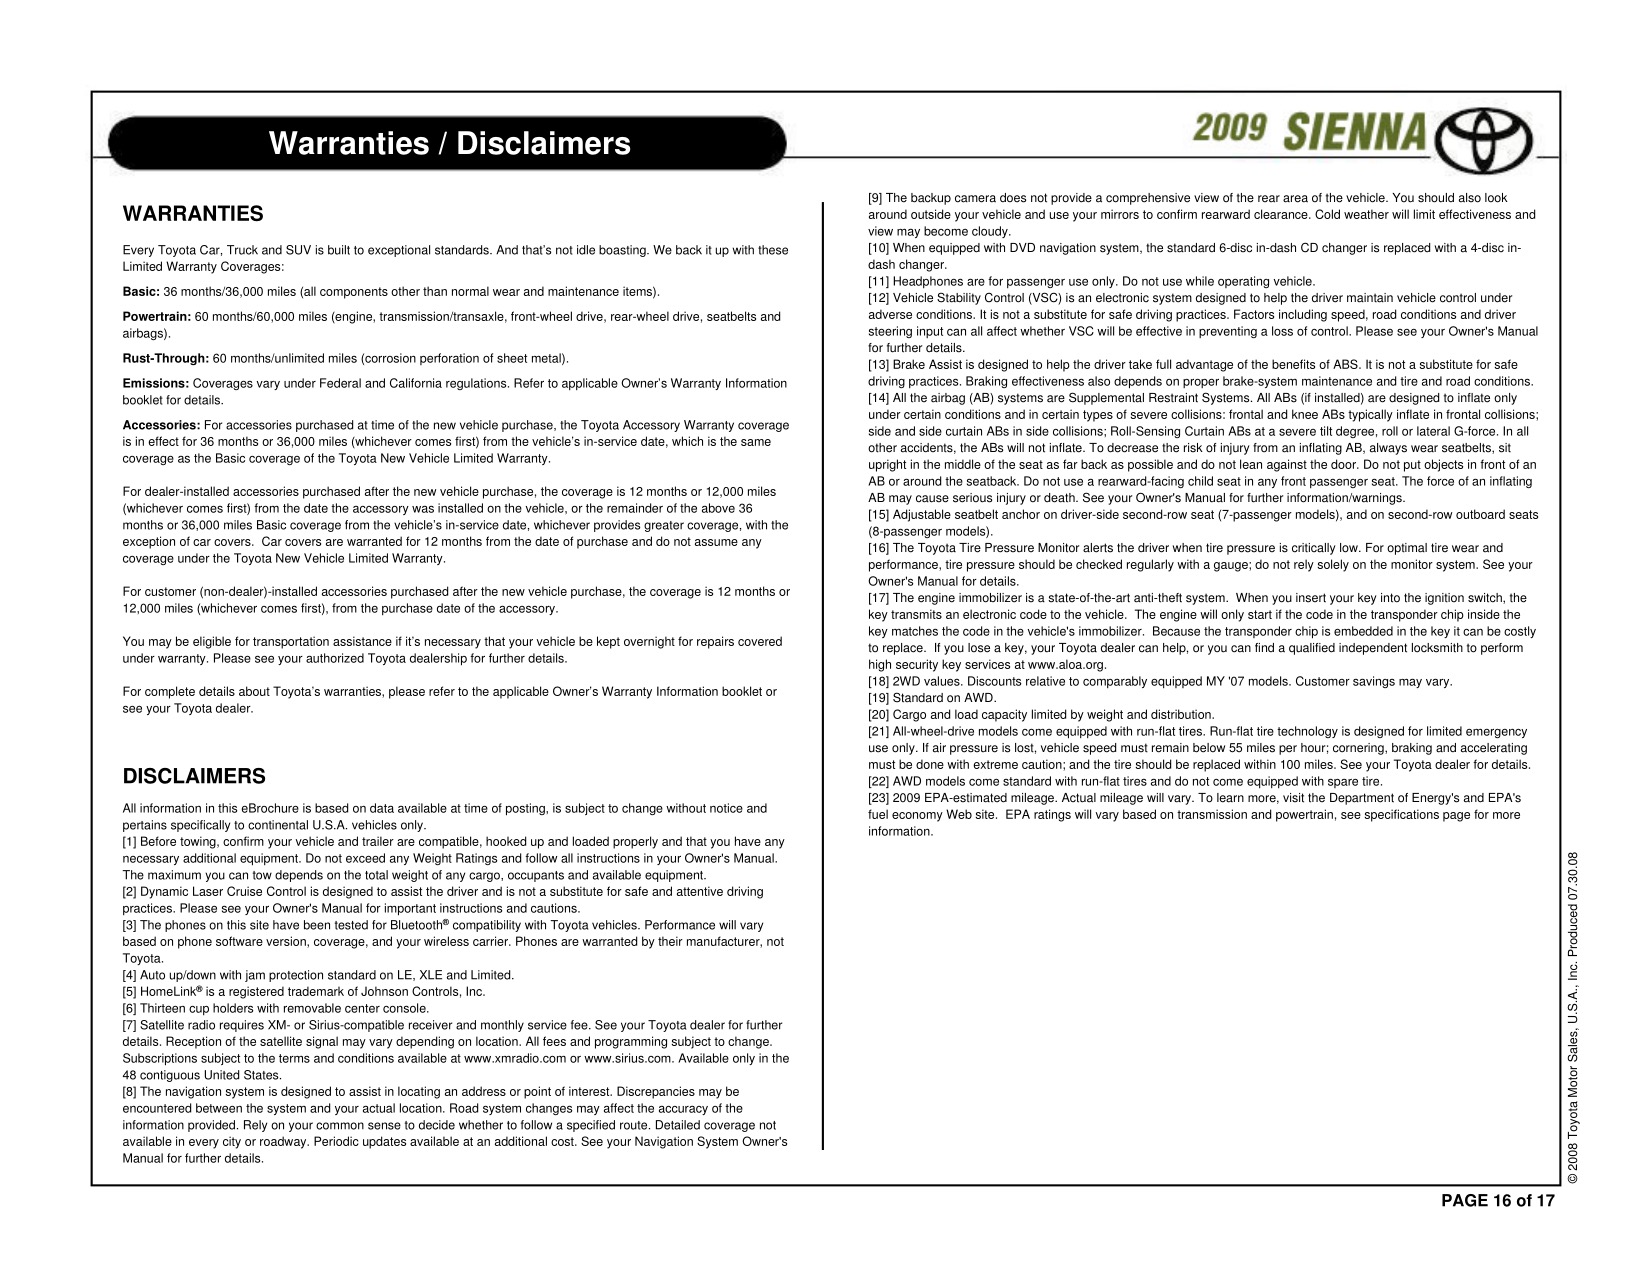 2009 Toyota Sienna Brochure Page 16